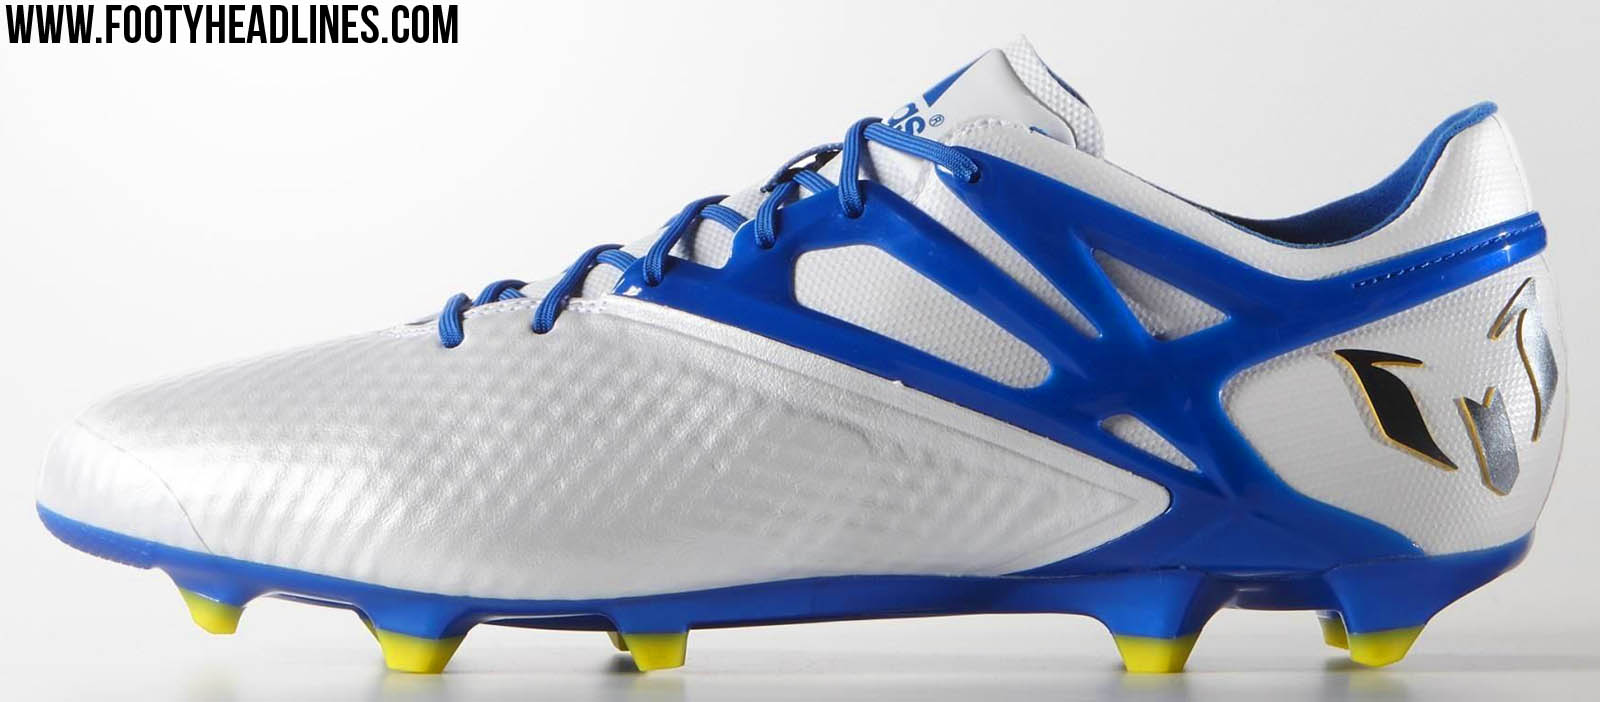 mot Chinese kool honderd White Adidas Messi 2015-2016 Boots Released - Footy Headlines